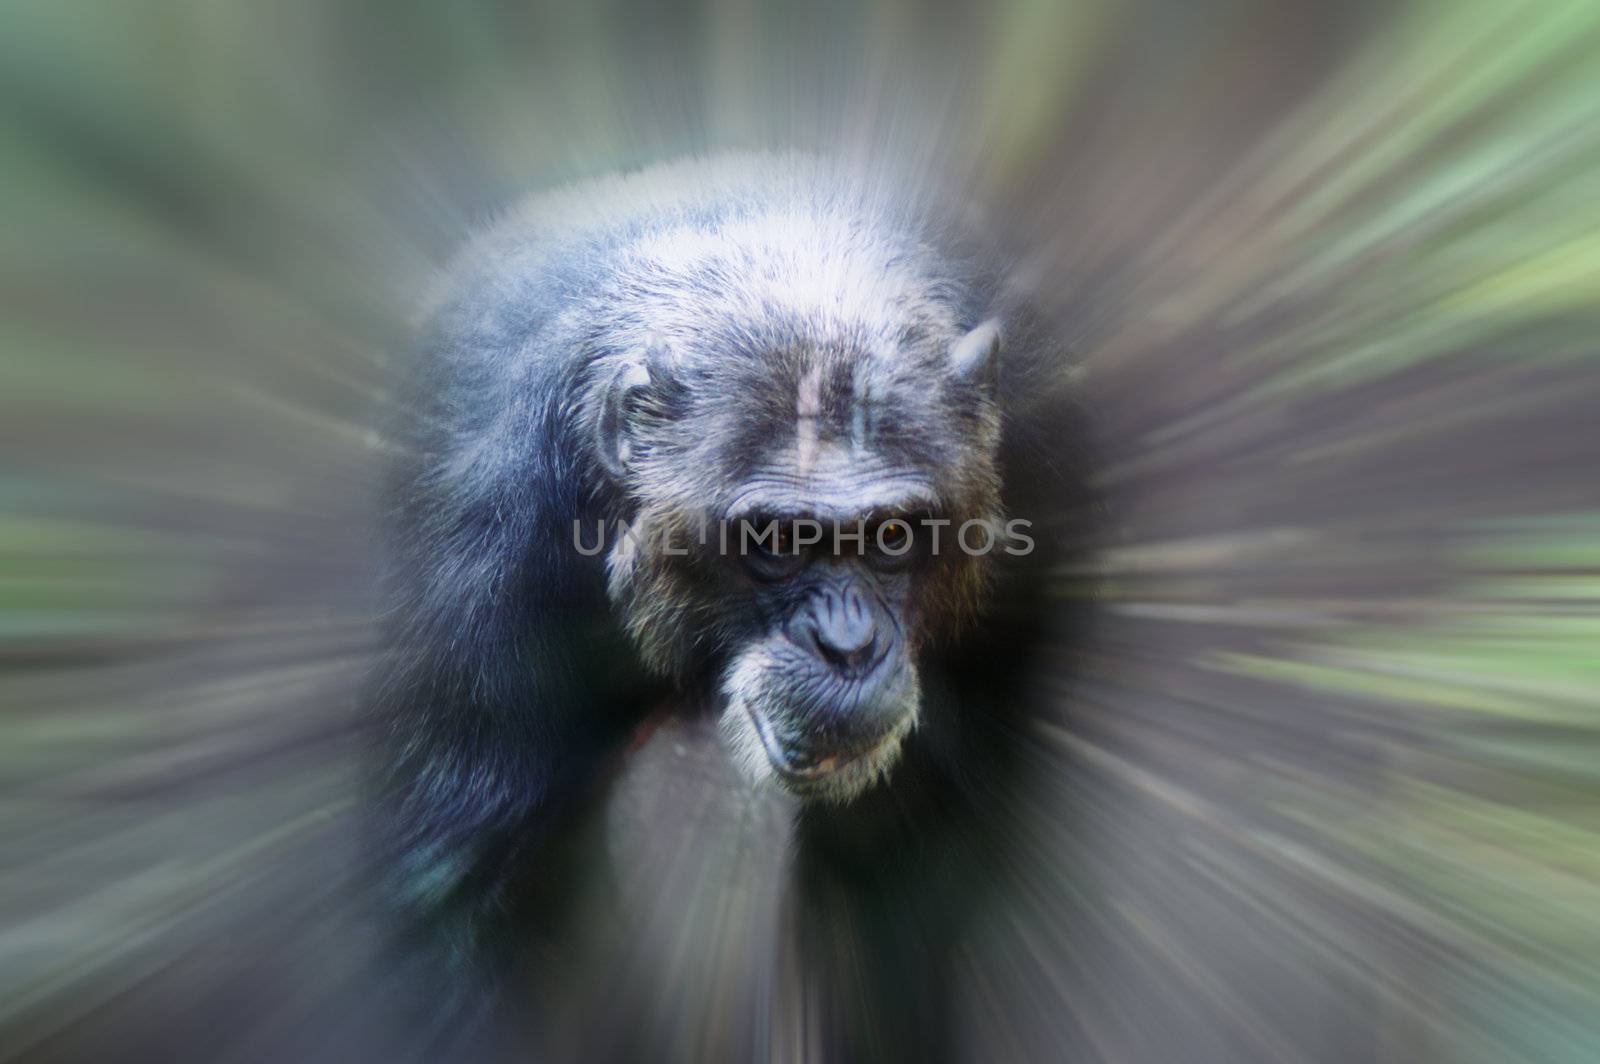 Monkey in focus by photochecker